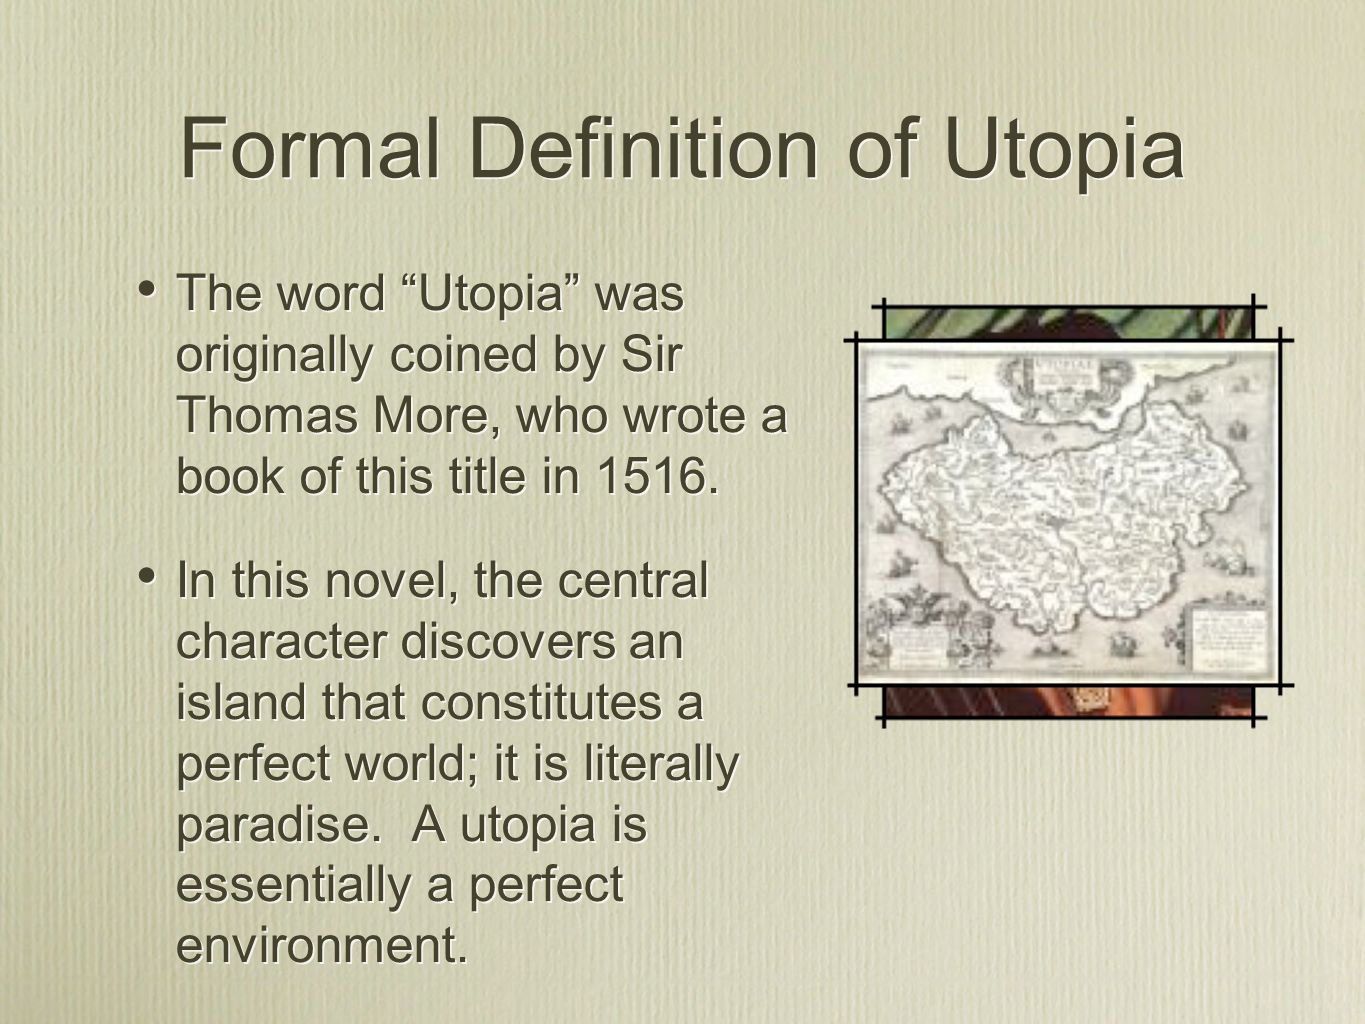 who wrote the book utopia